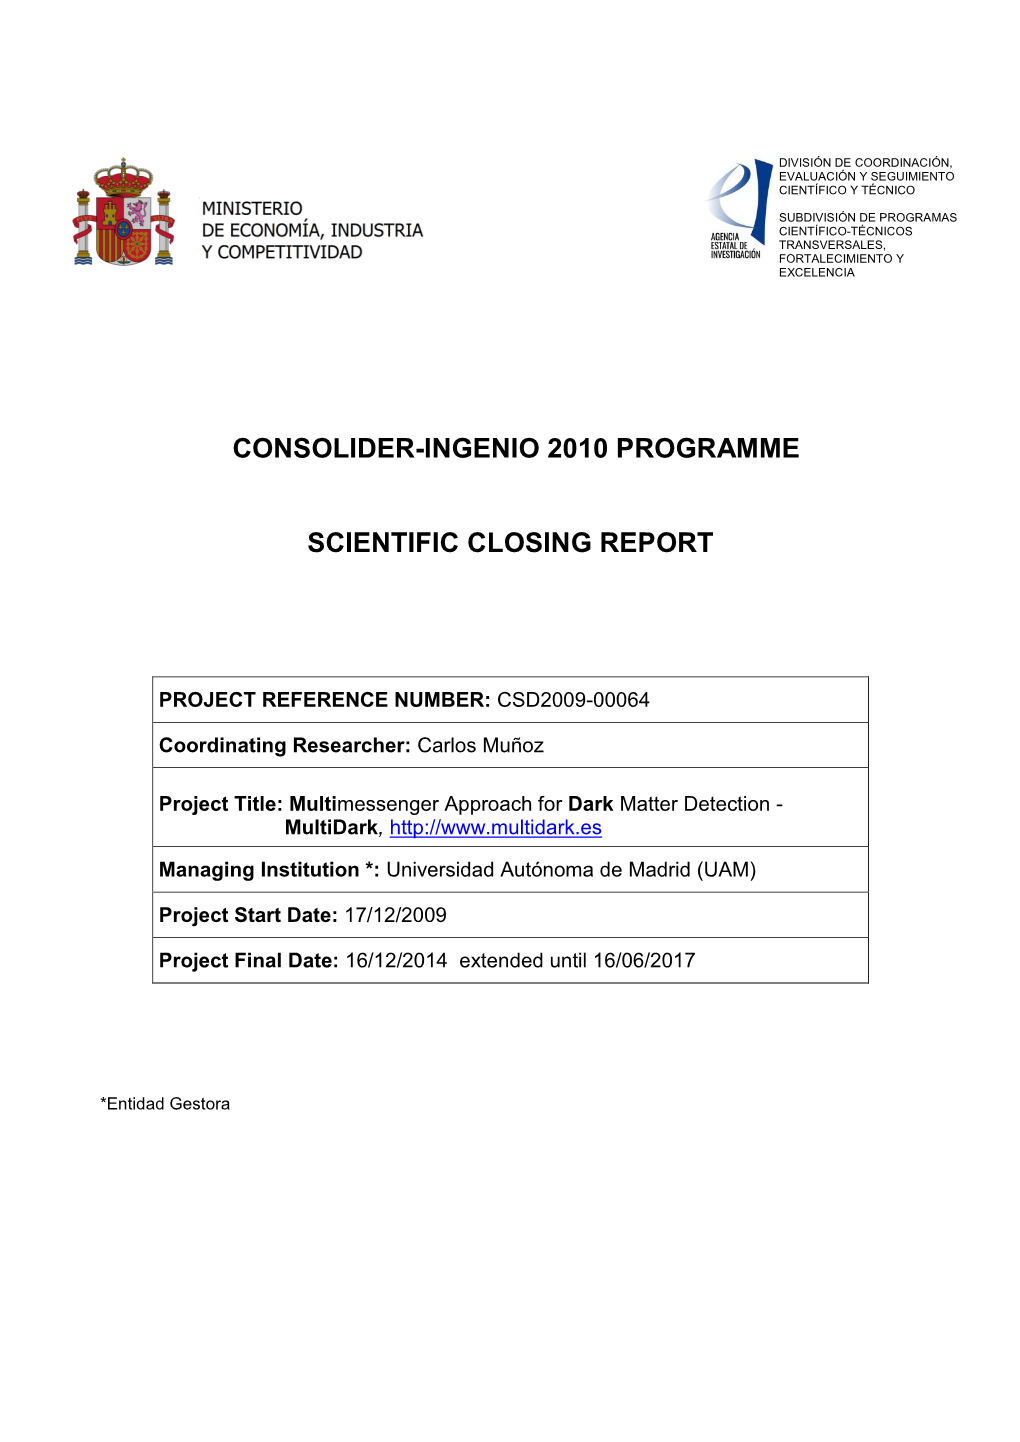 Consolider-Ingenio 2010 Programme Scientific